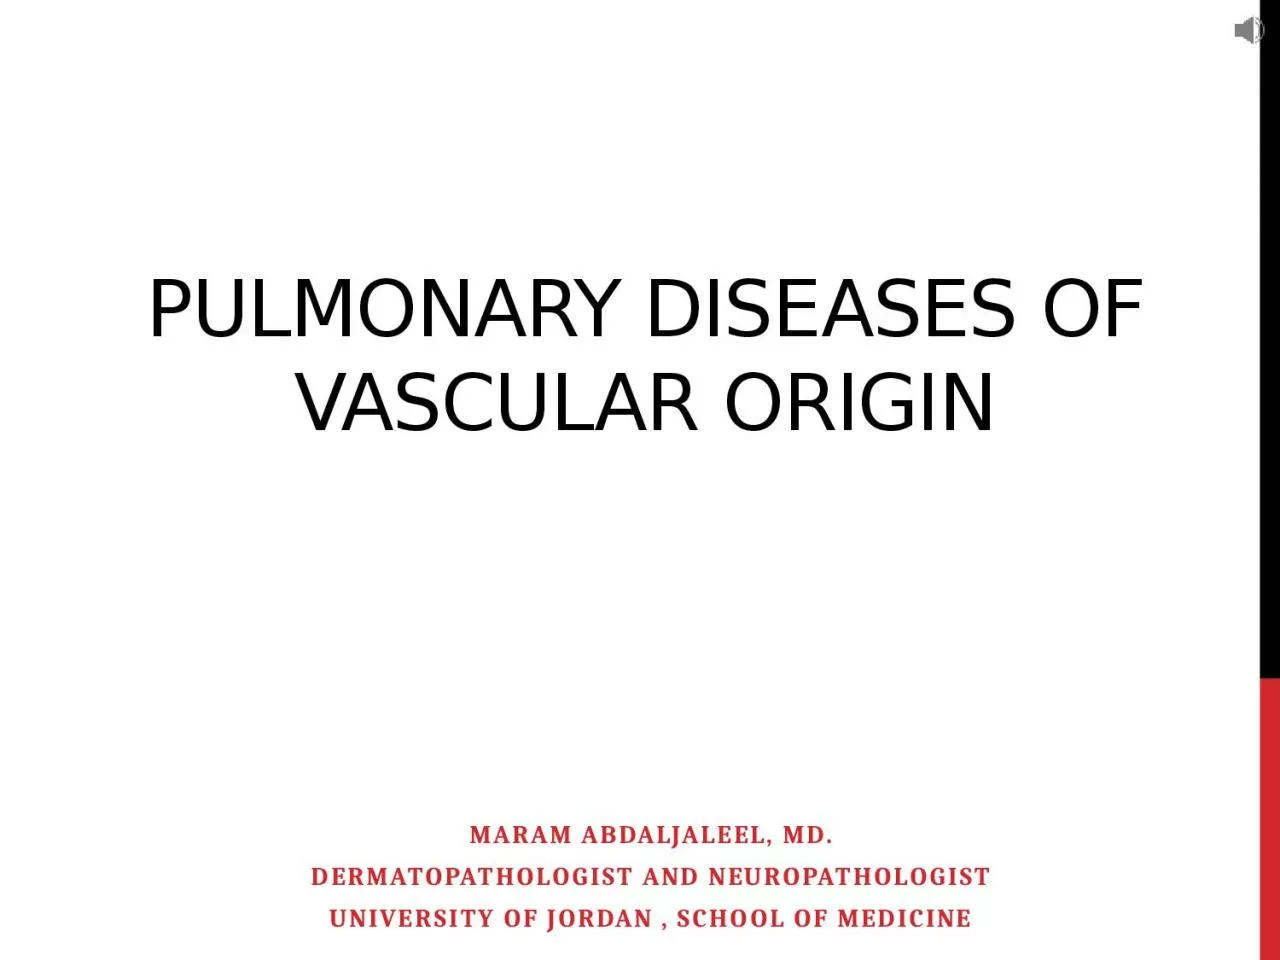 Pulmonary diseases of vascular origin